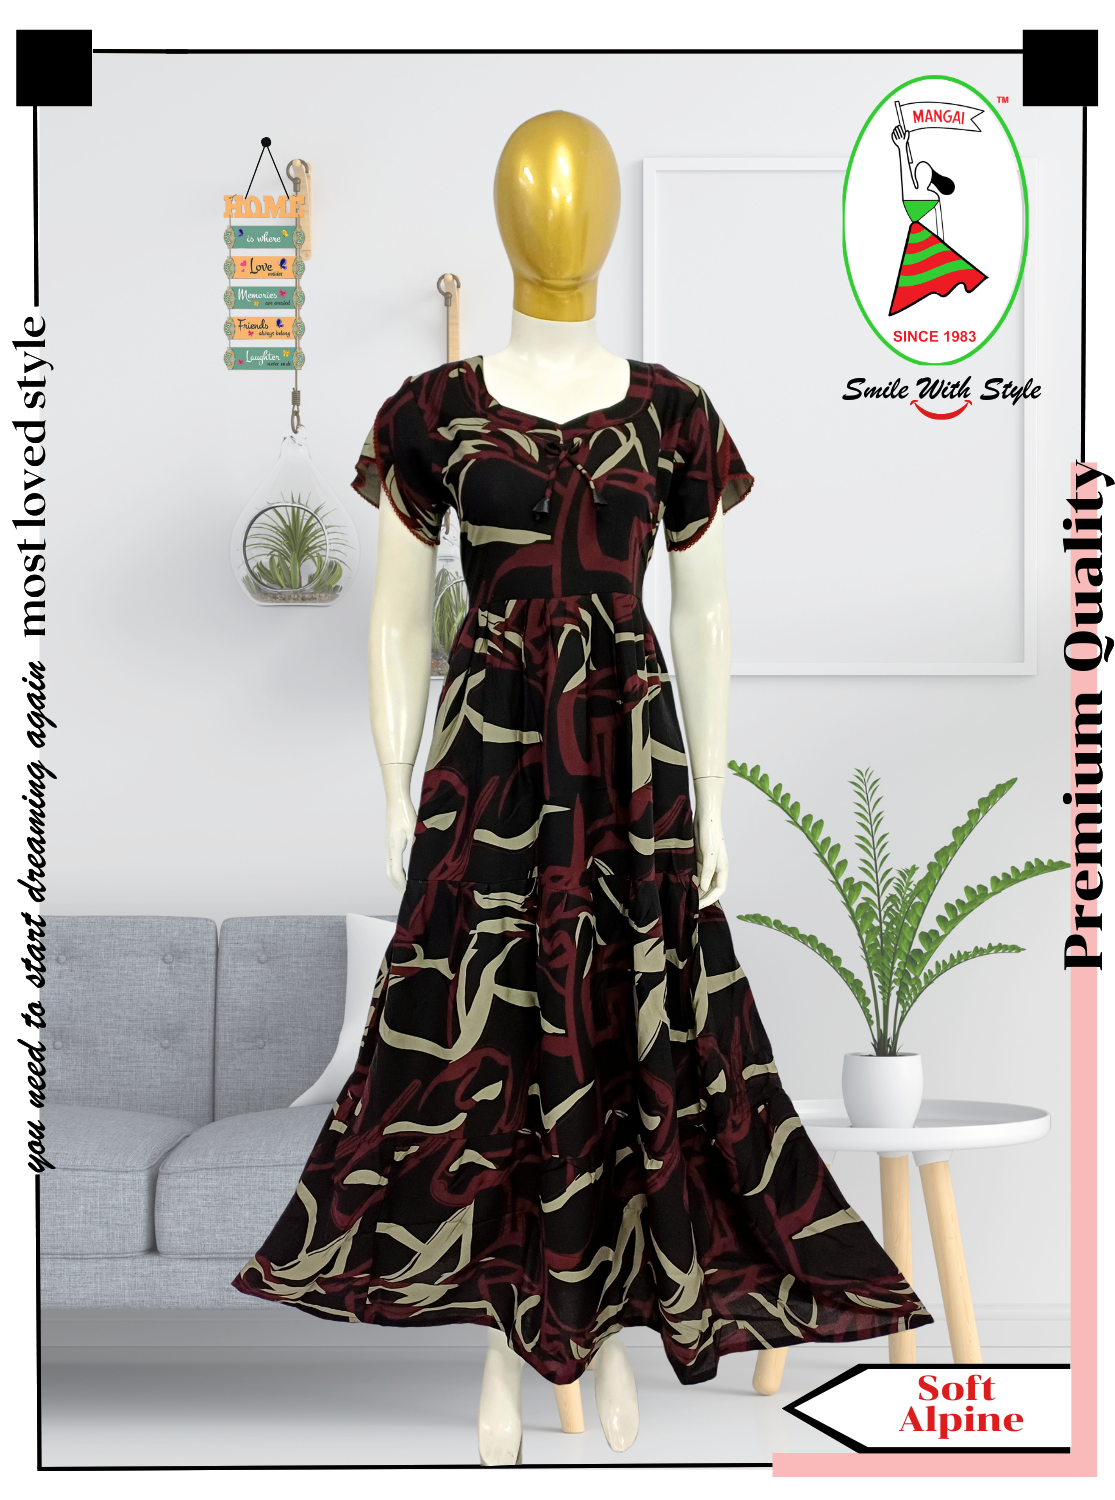 MANGAI Premium Alpine FROCK Model Nighties | Beautiful Stylish Frock Style | Stylish Sleeves | Perfect Nightwear Trendy Women's